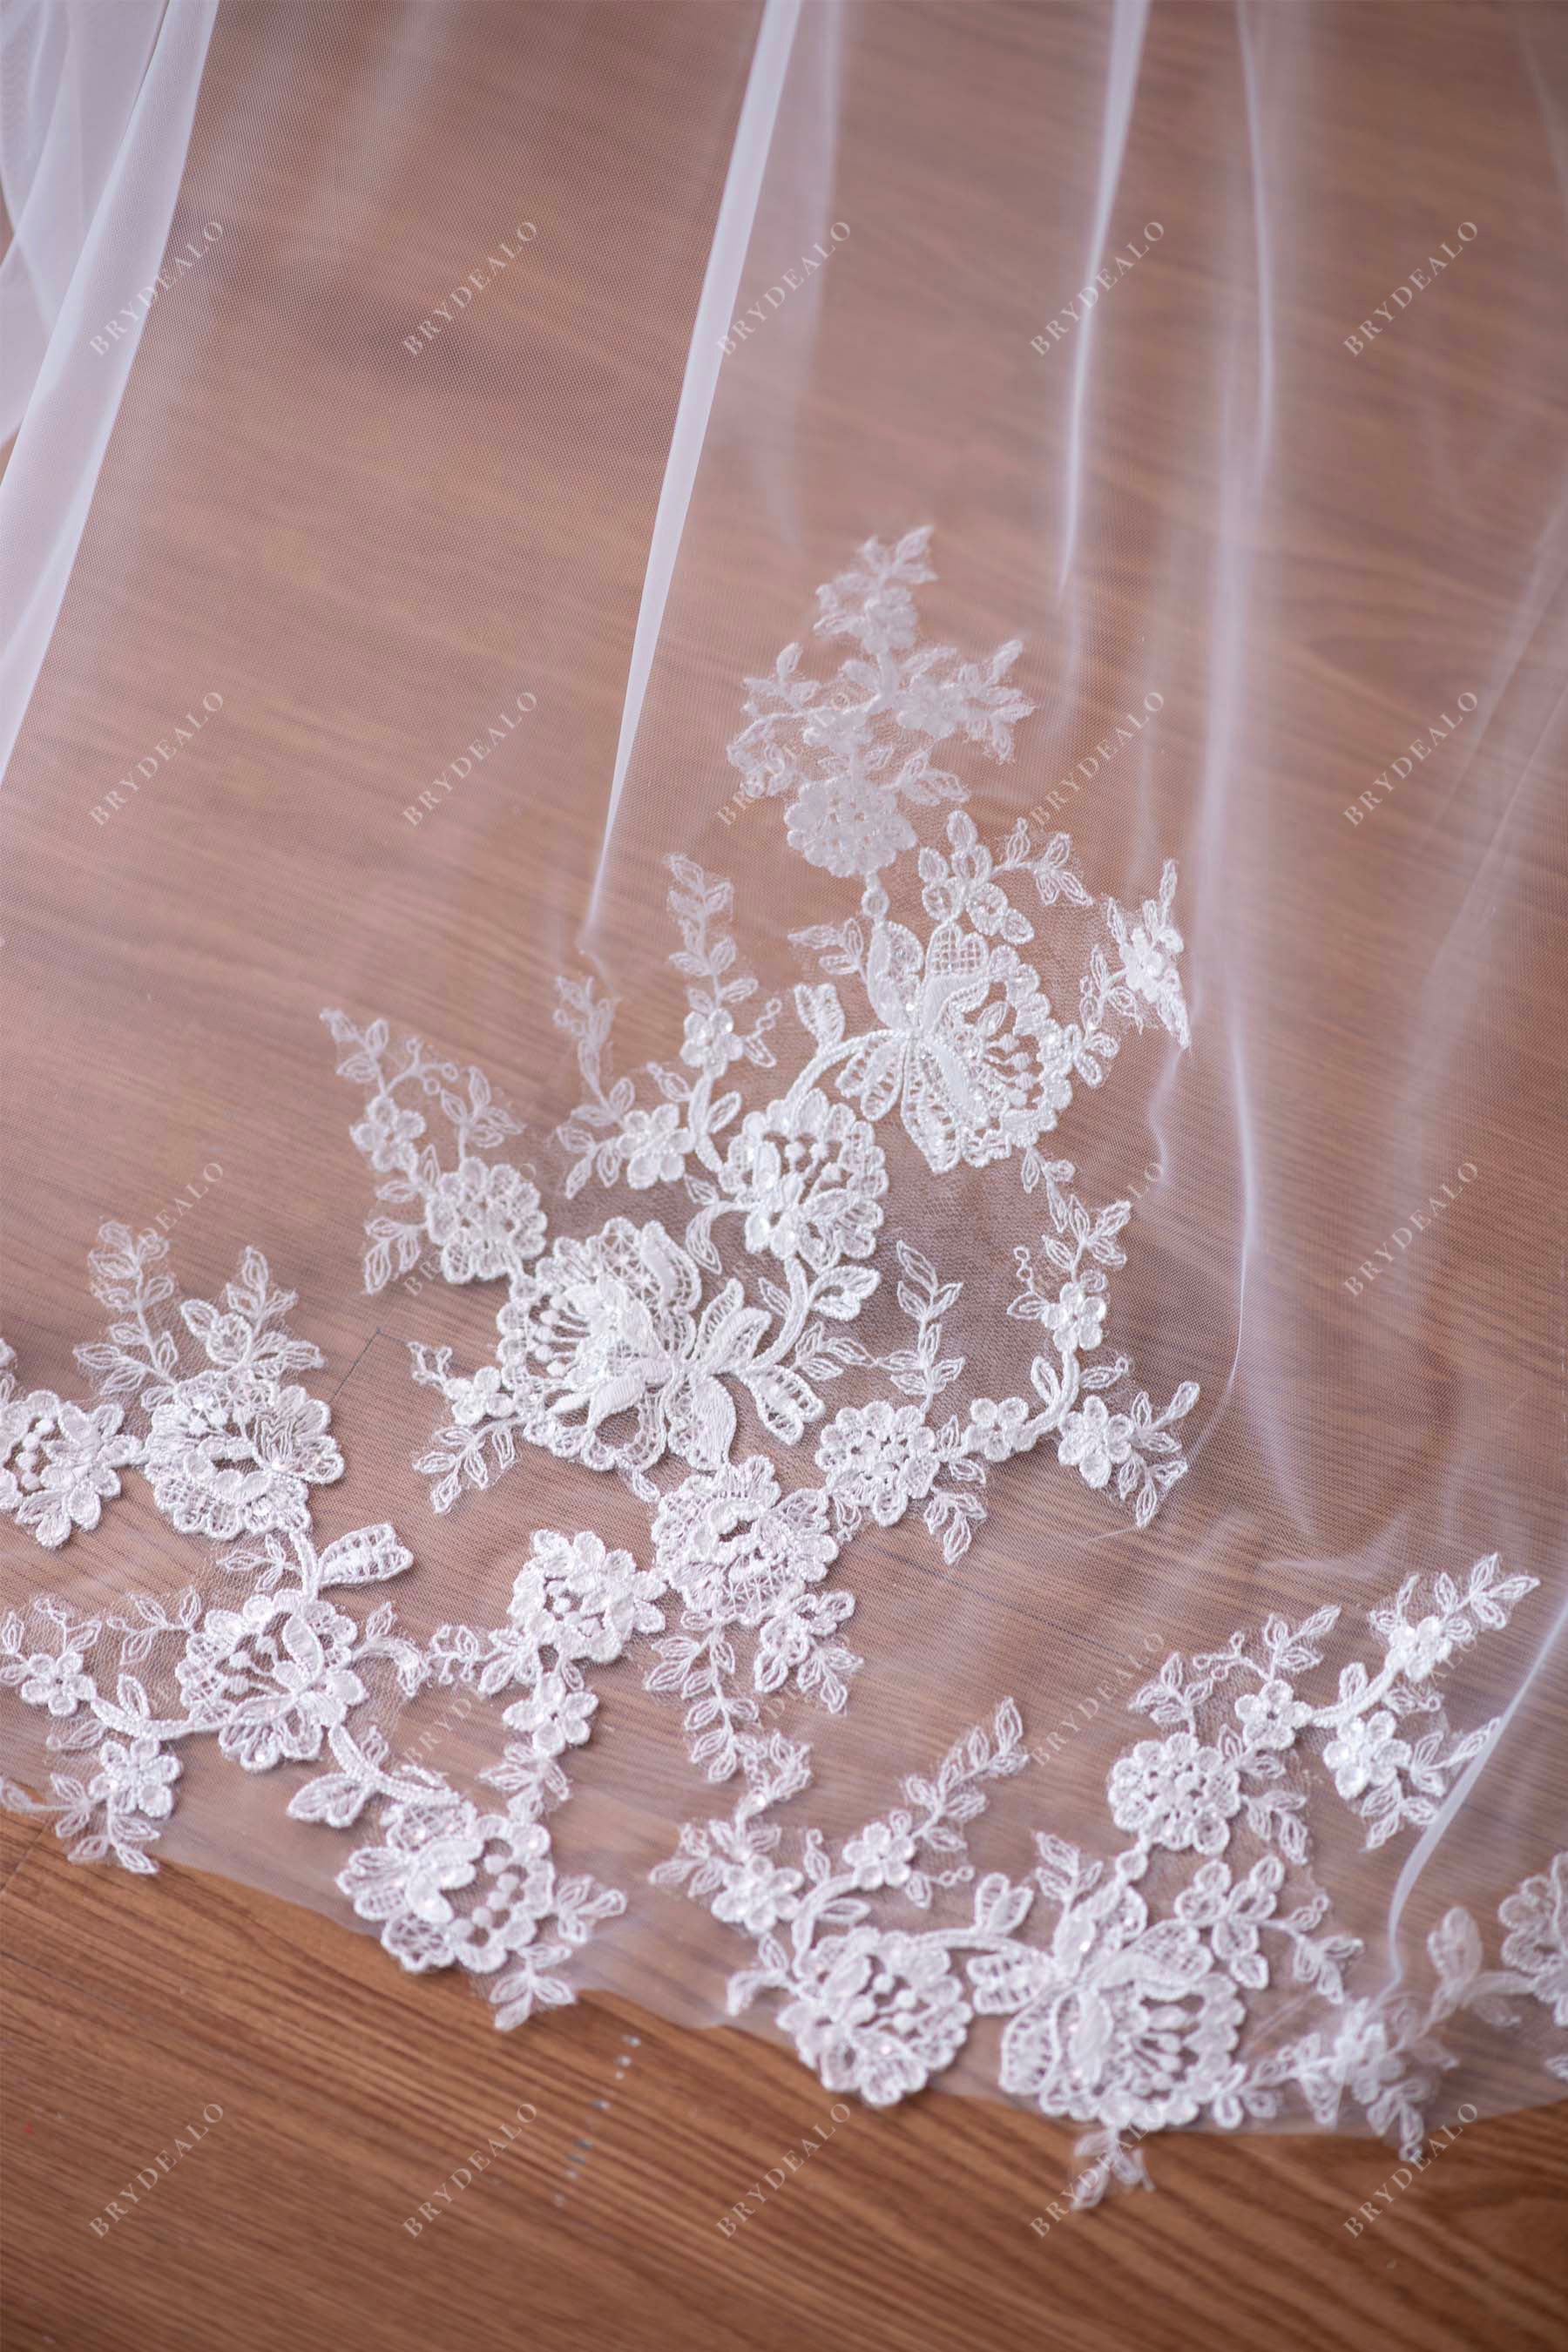 shimmery flower lace veil online